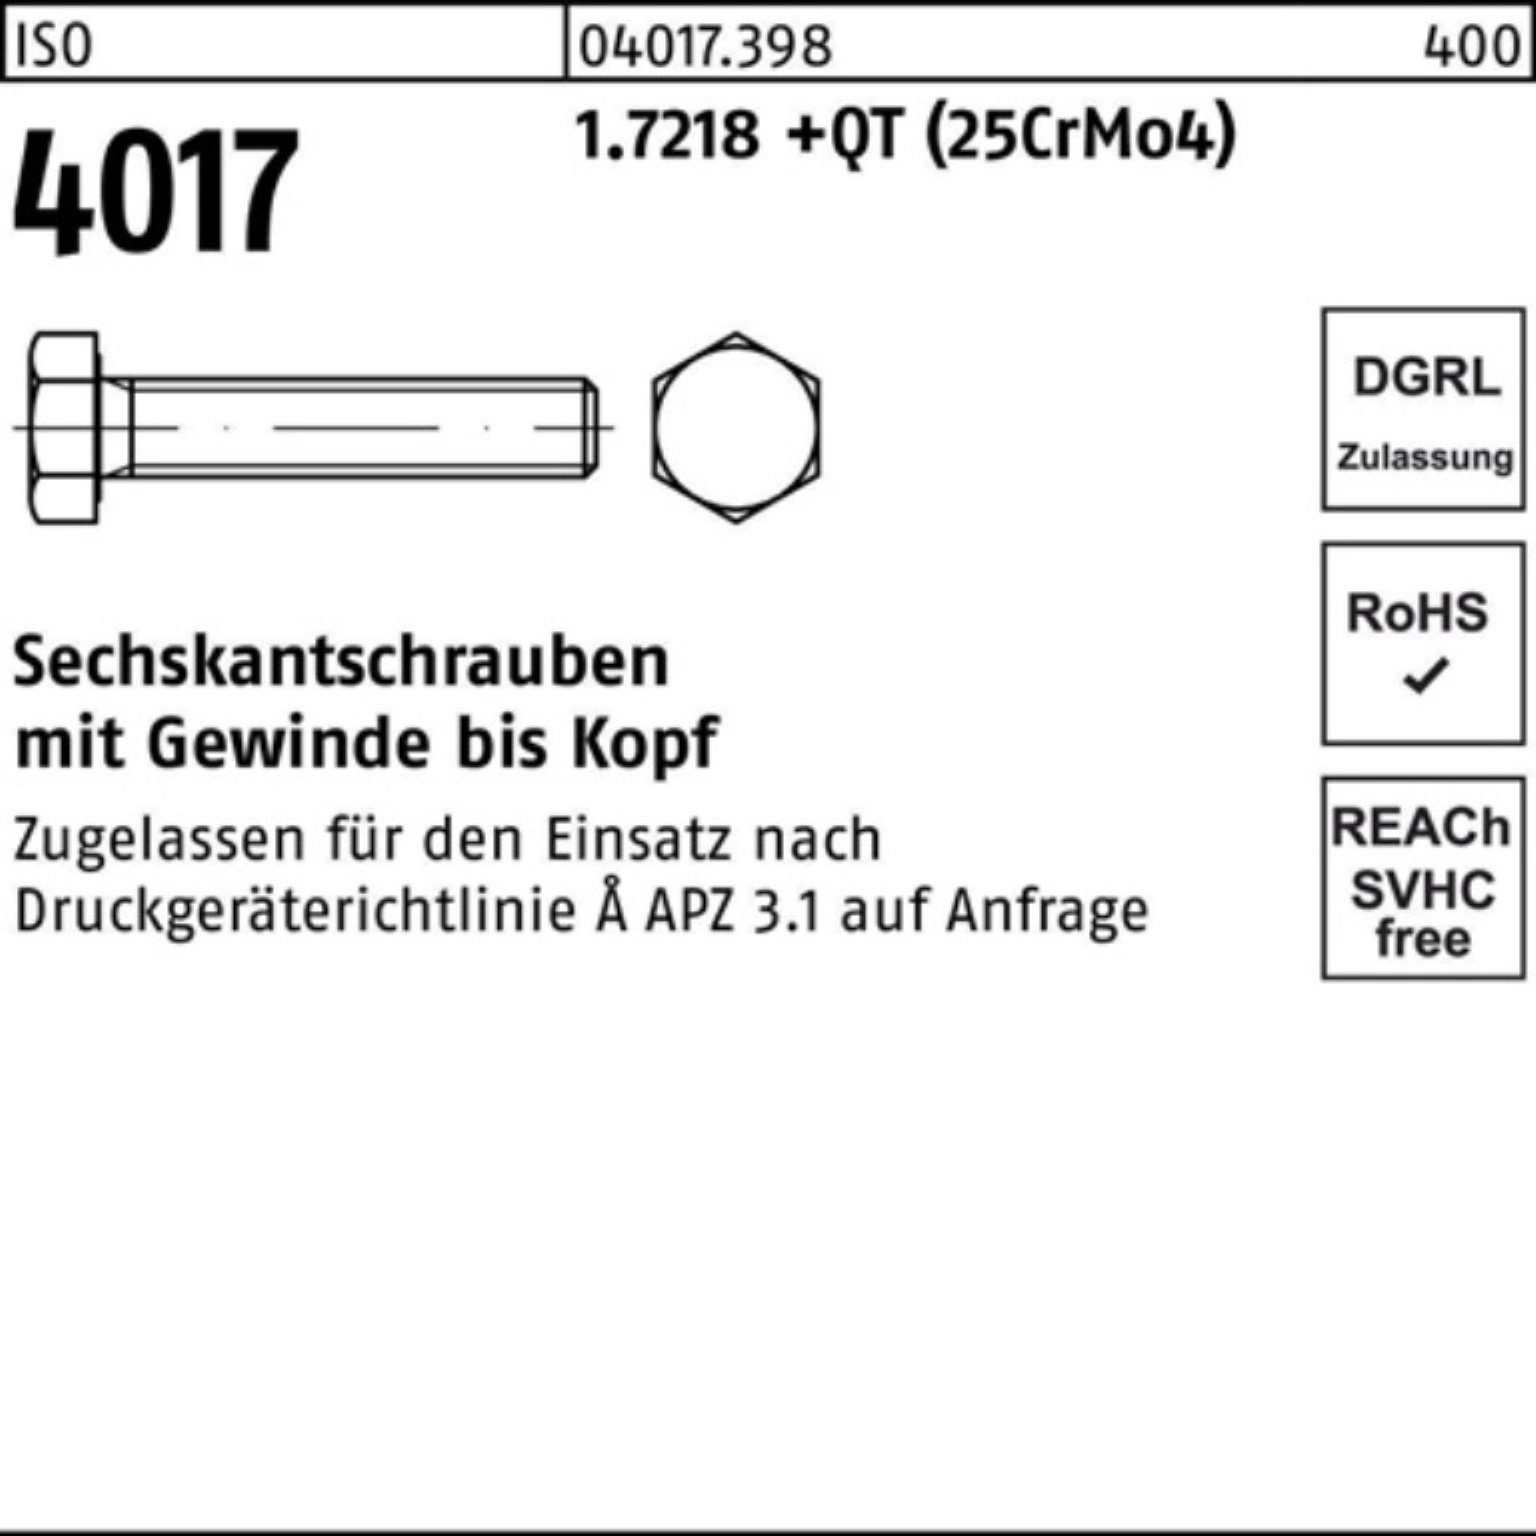 Bufab Sechskantschraube 100er Pack Sechskantschraube ISO VG 1.7218 4017 +QT 140 (25CrMo4) M20x